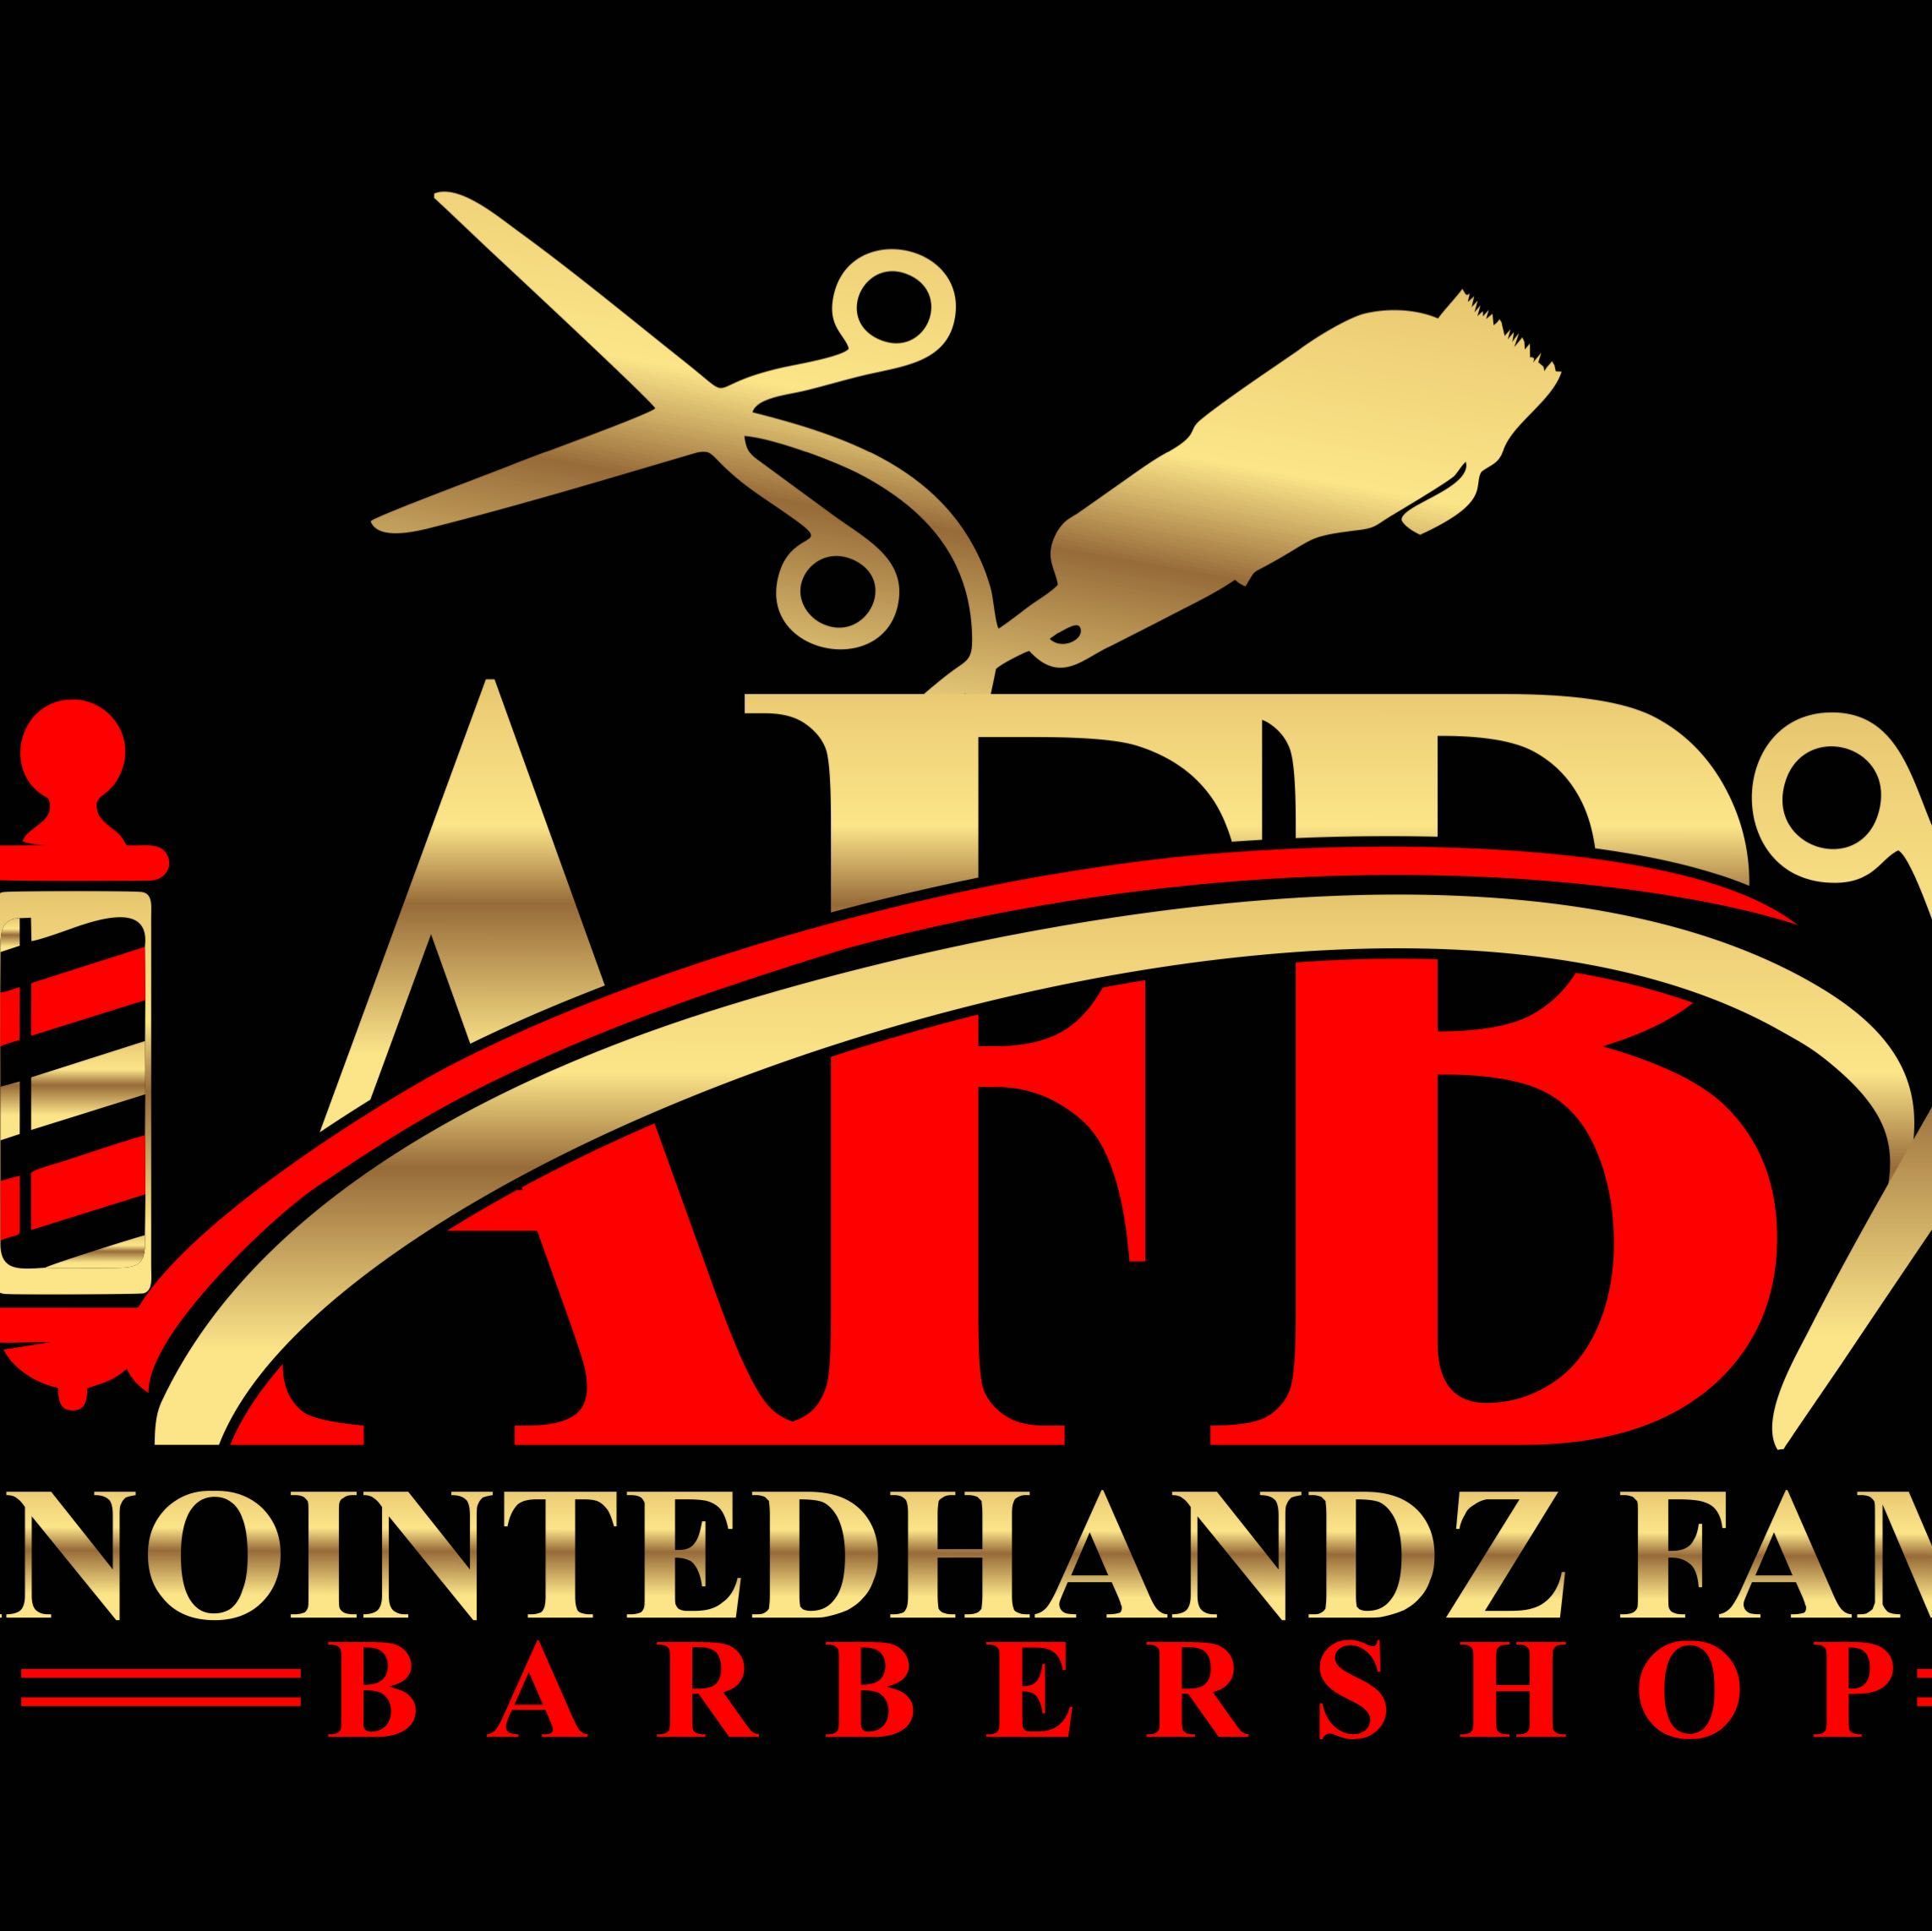 Anointedhandz Family Barbershop, 438 north Main Street, Crestview, 32536